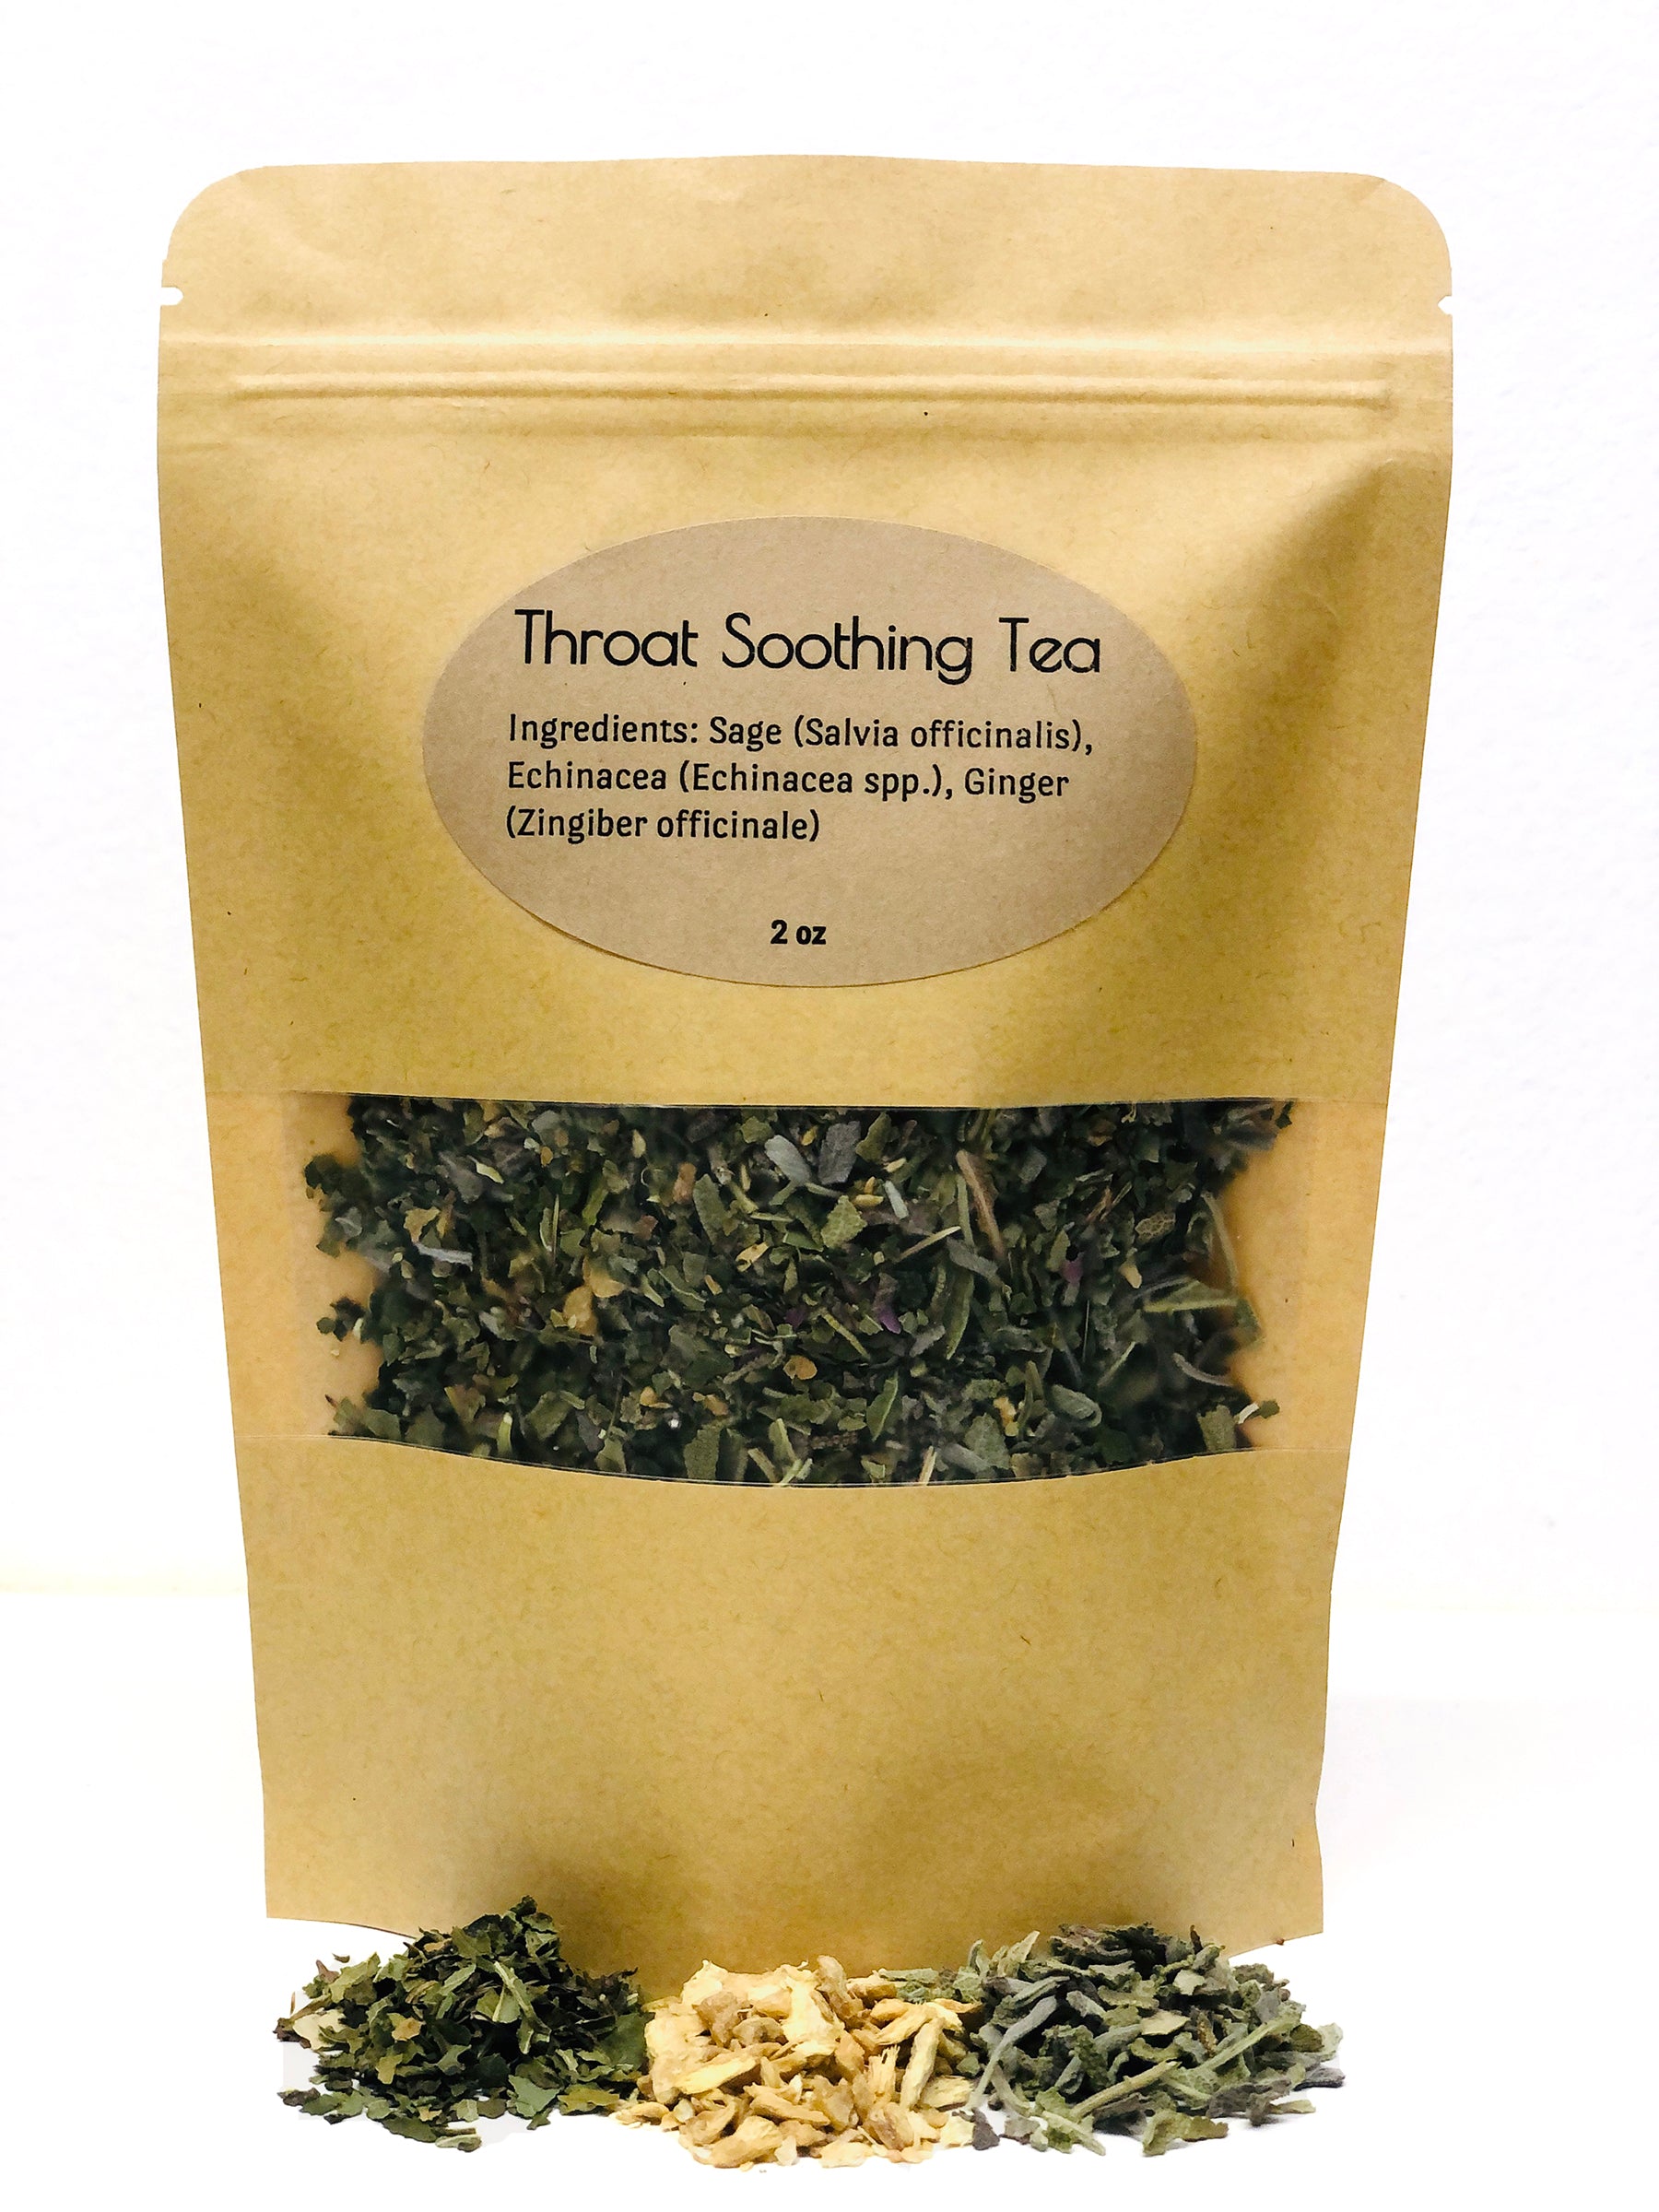 Throat Soothing Tea Tea The Herbologist Shop 